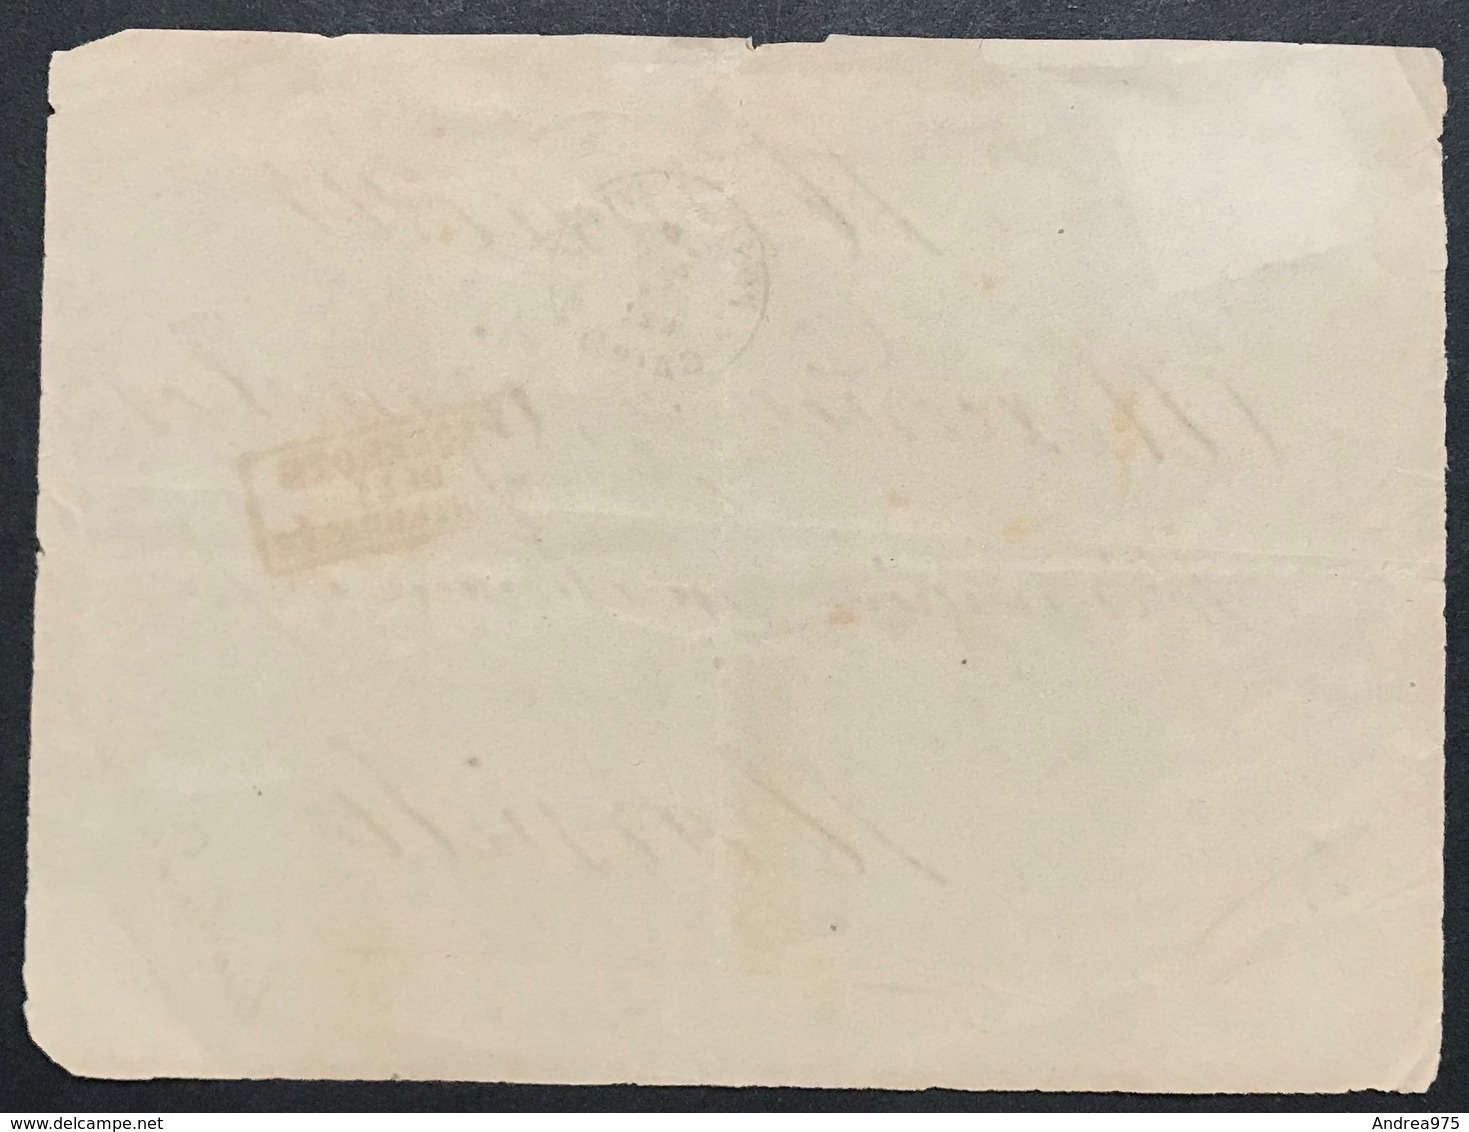 1 Piastre, Front Letter From Cairo "Poste Egiziane" 2/6/1879 To France (Marseille) + Paquebots De La Mediterranee - 1866-1914 Khedivate Of Egypt